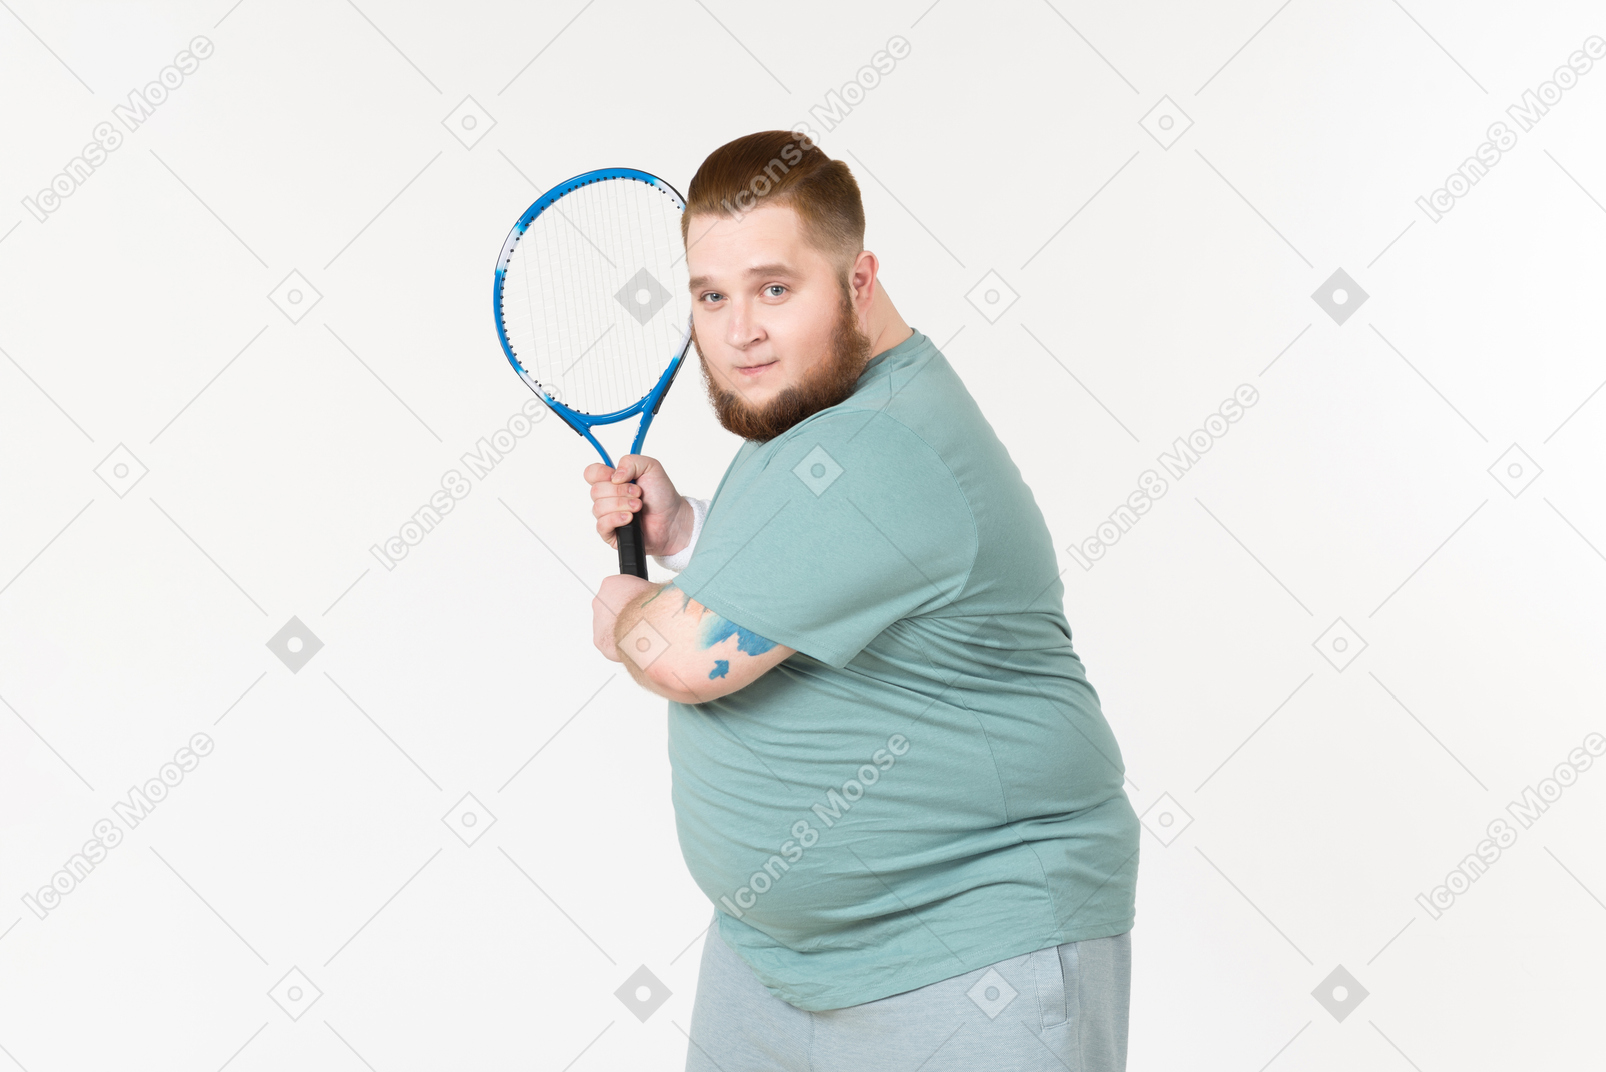 Cara grande no sportswear segurando raquete de tênis